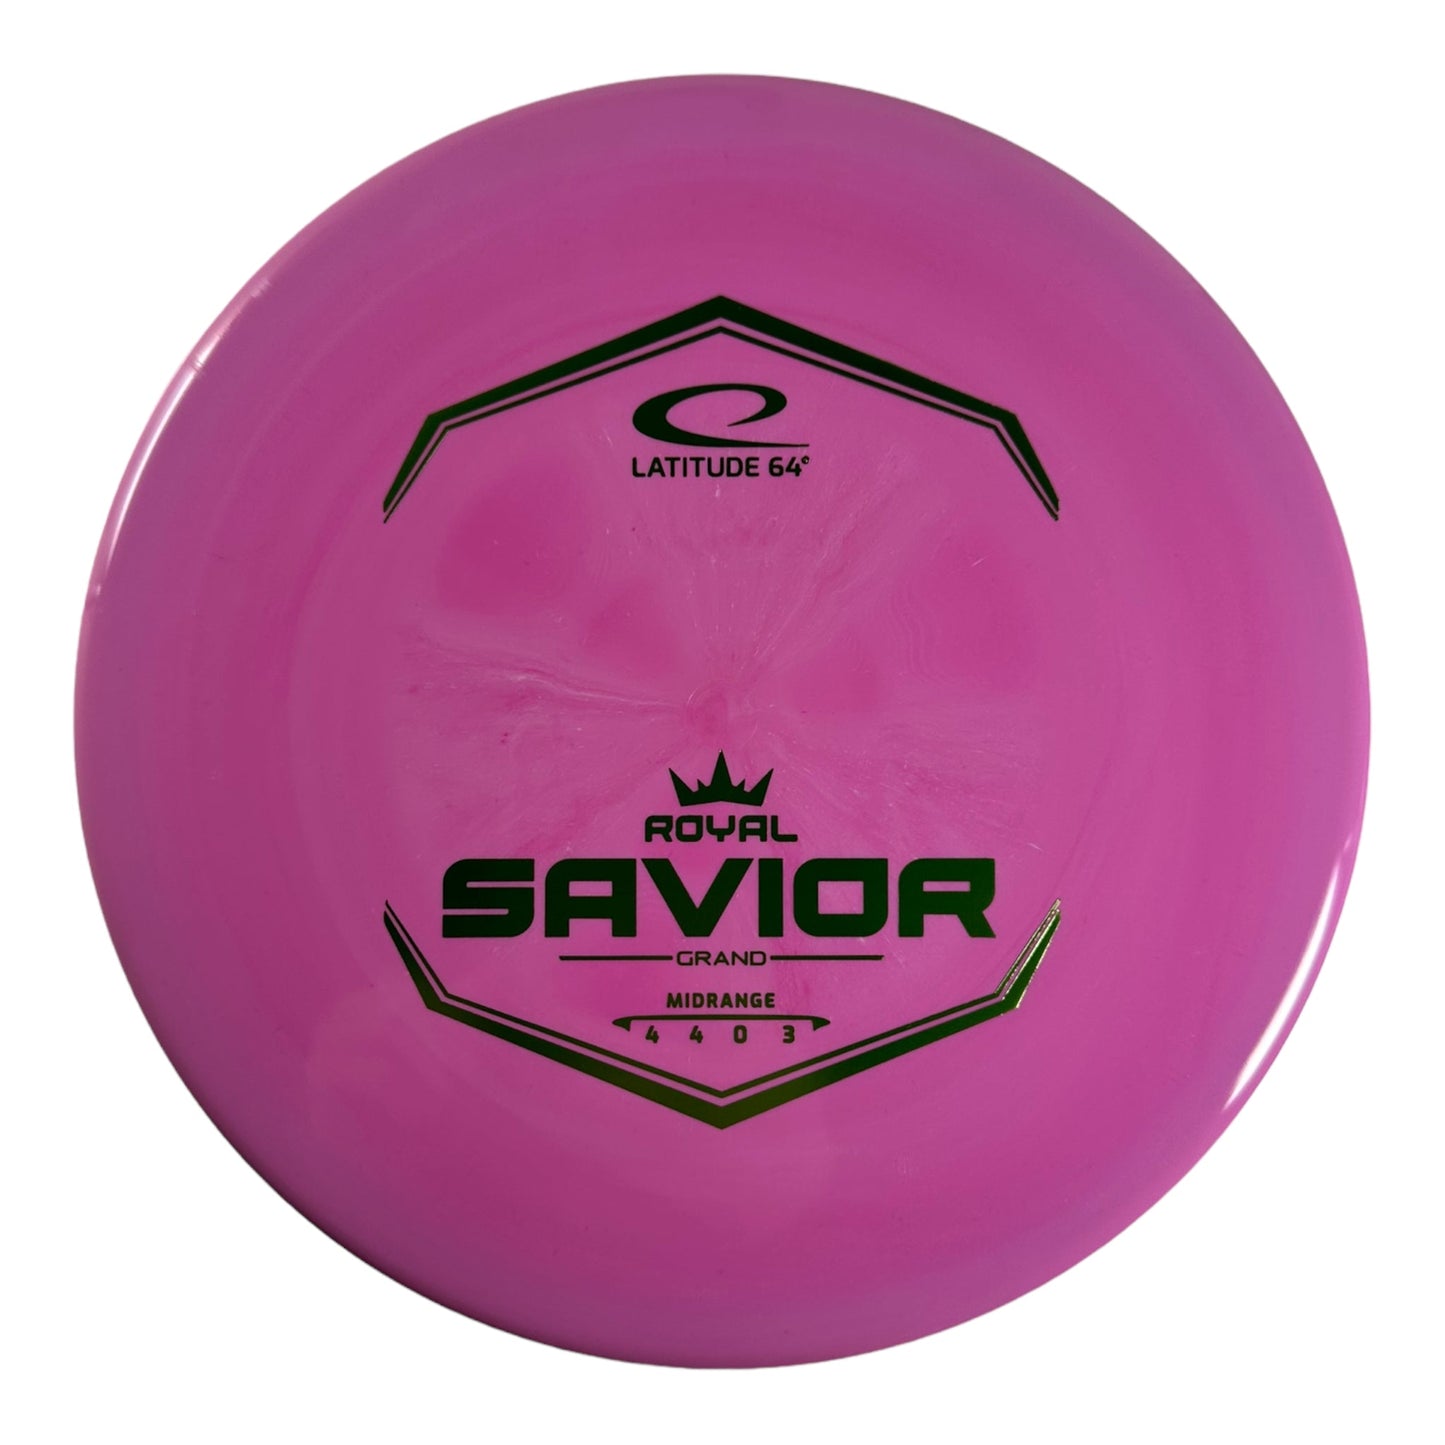 Latitude 64 Savior | Royal Grand | Pink/Green 173- 174g Disc Golf